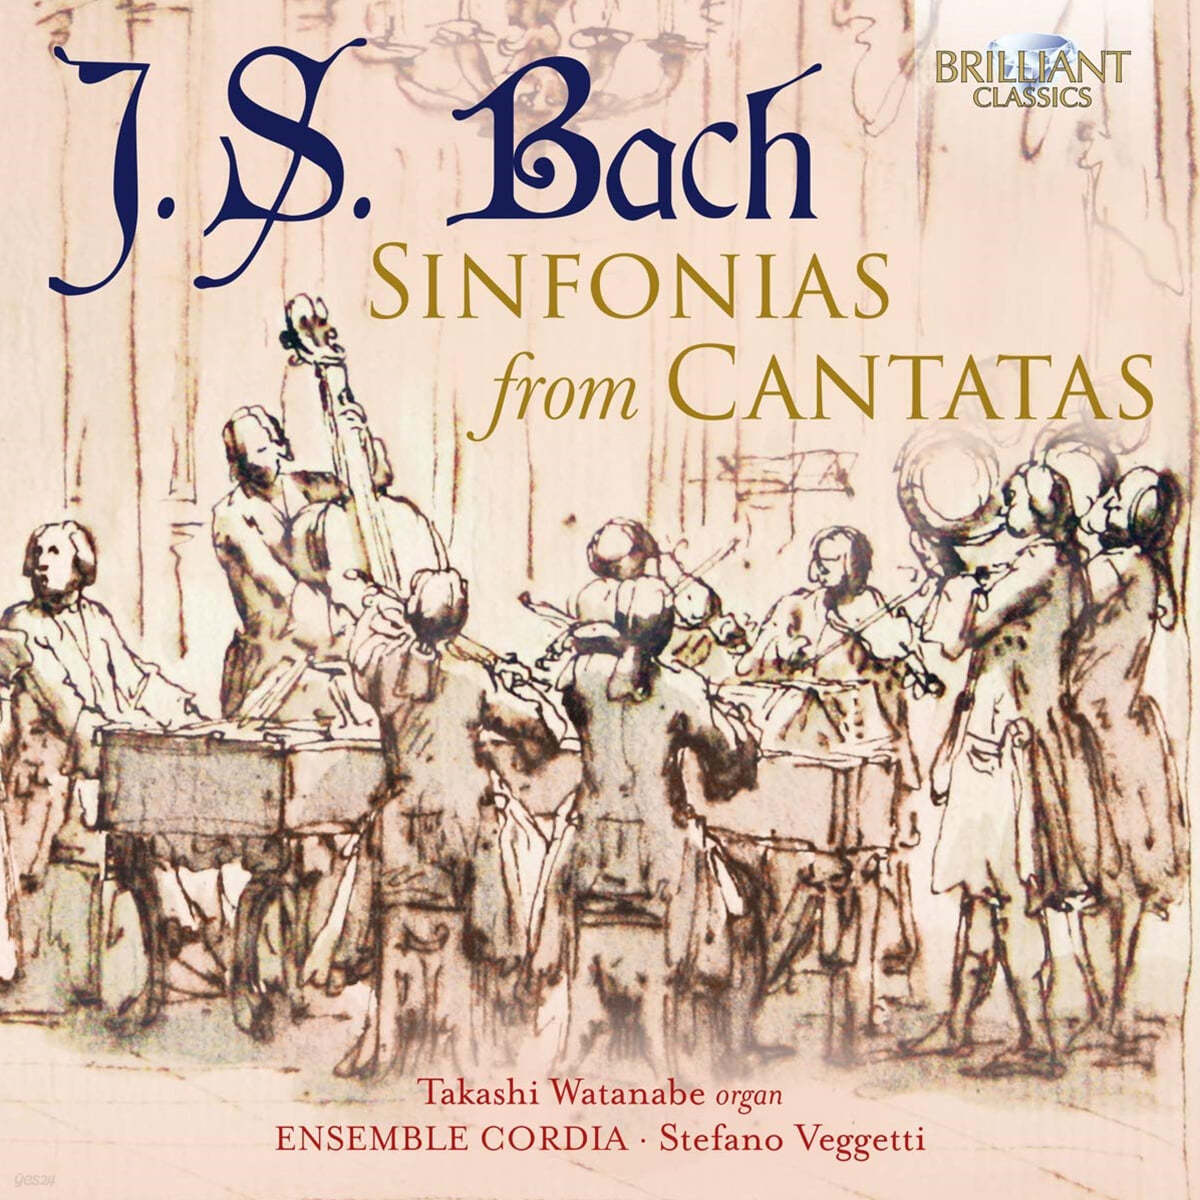 Ensemble Cordia 바흐: 칸타타에서 발췌한 신포니아 모음 (J.S. Bach: Sinfonias from Cantatas) 